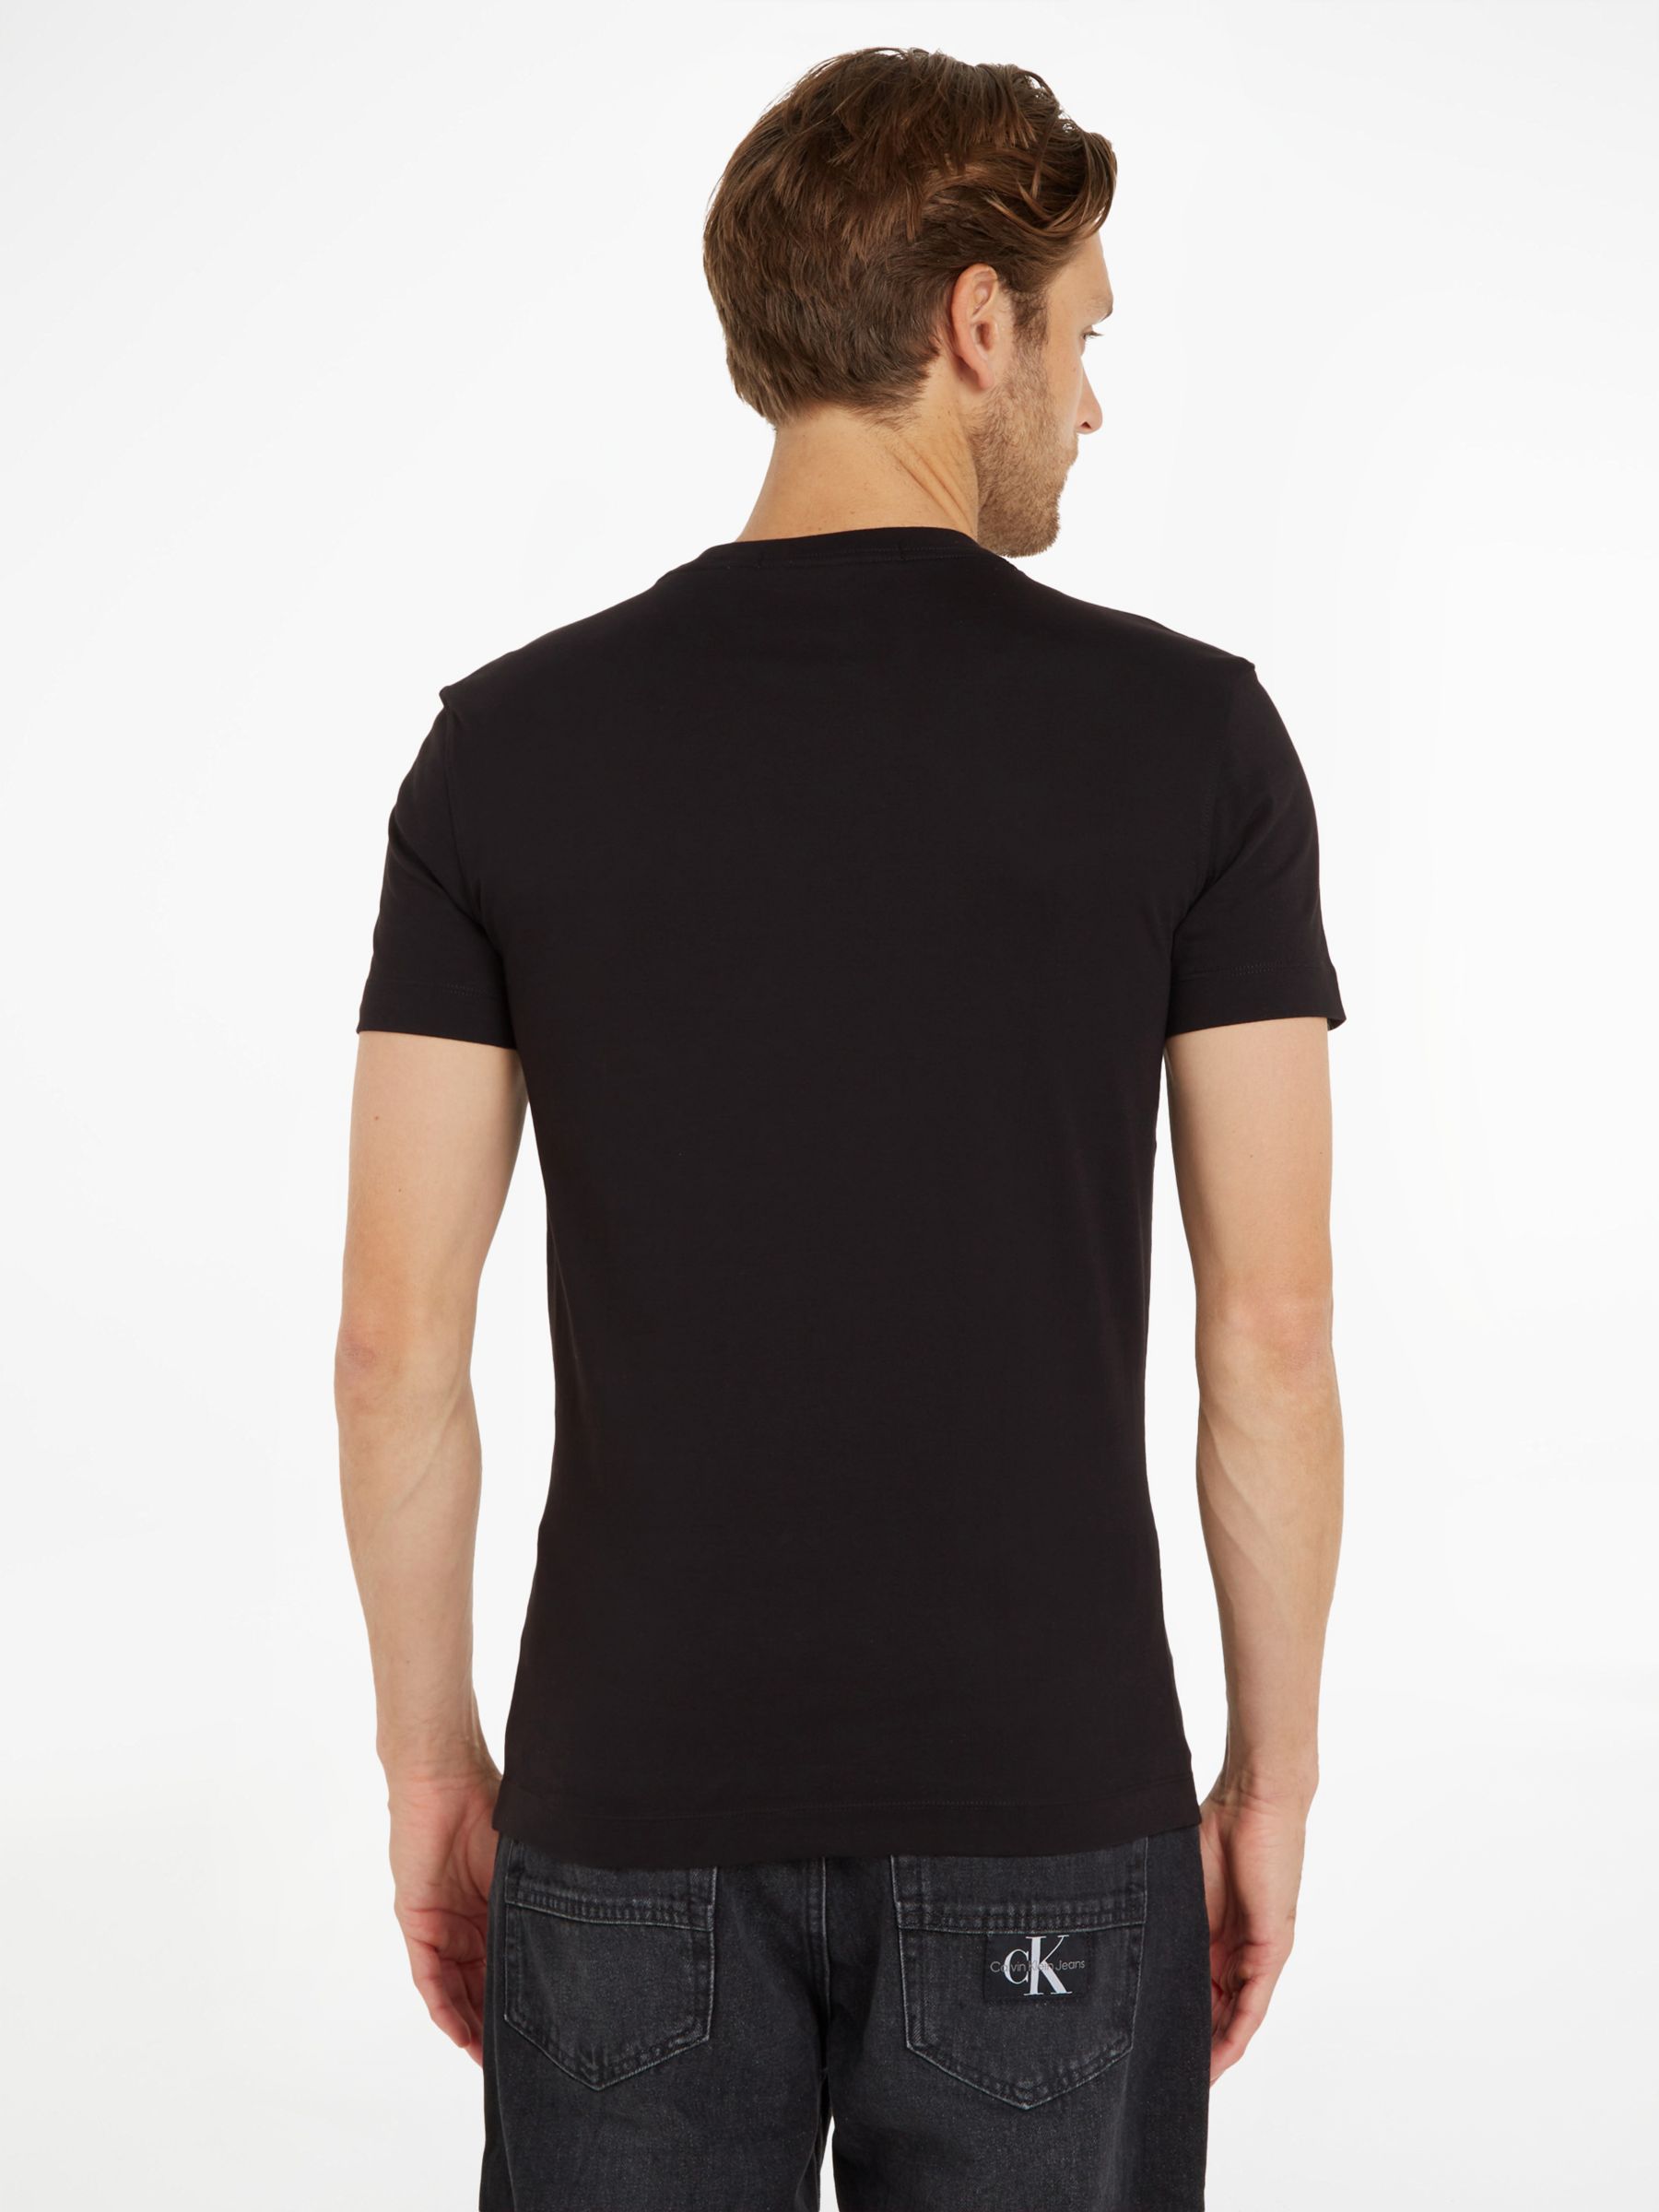 Calvin Klein Jeans Stacked Logo T-Shirt, CK Black, XL